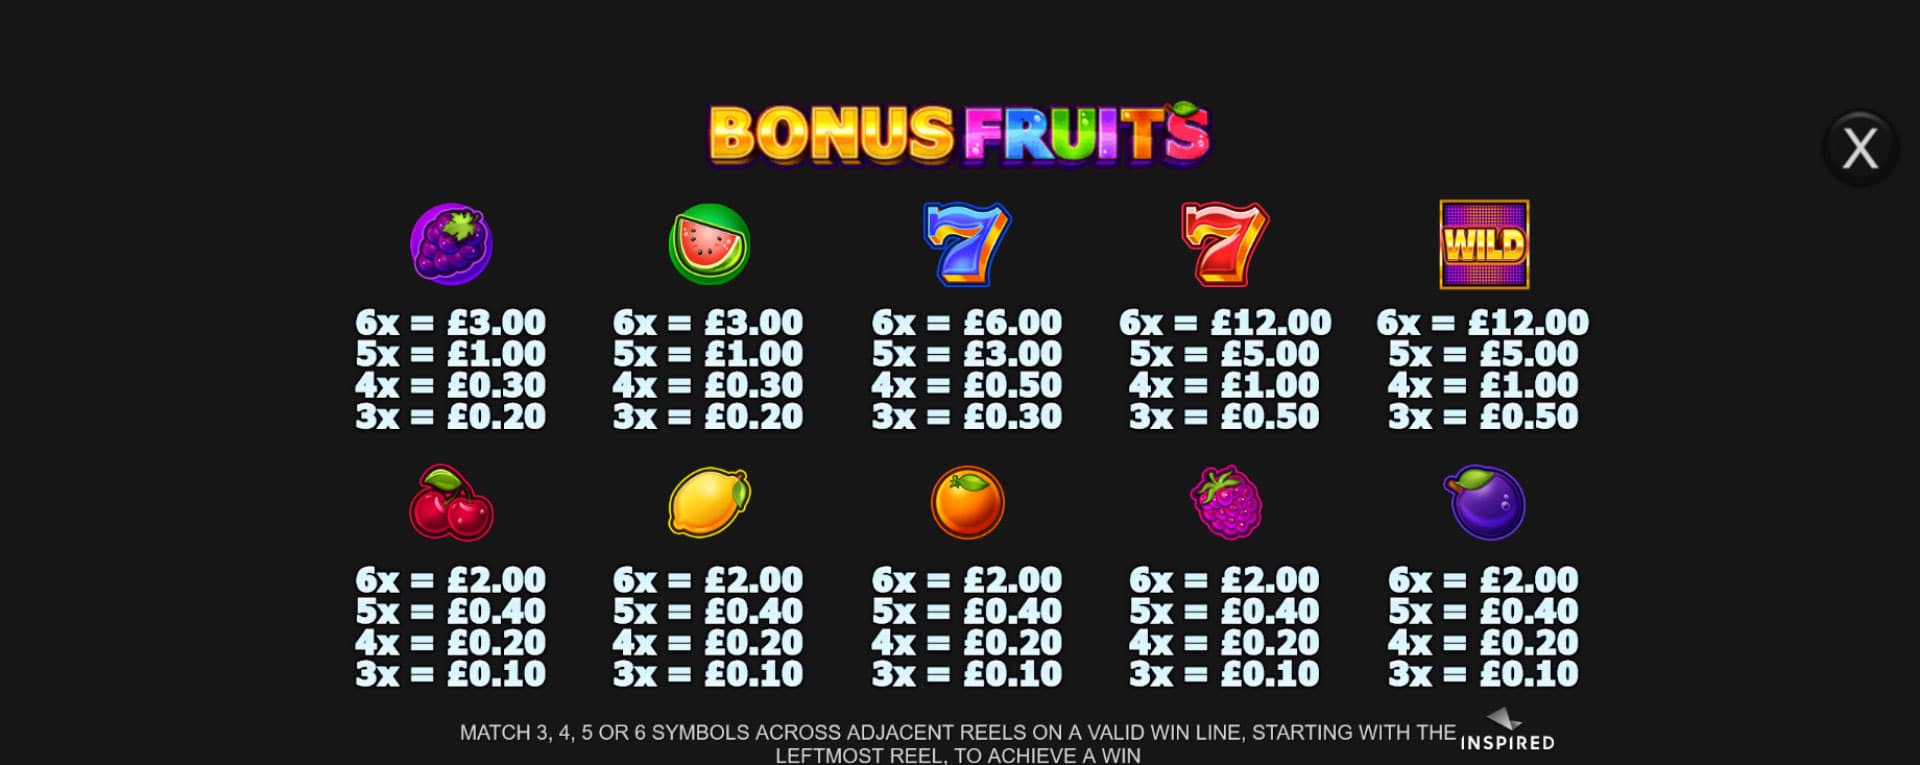 tabella dei simboli della slot online bonus fruits